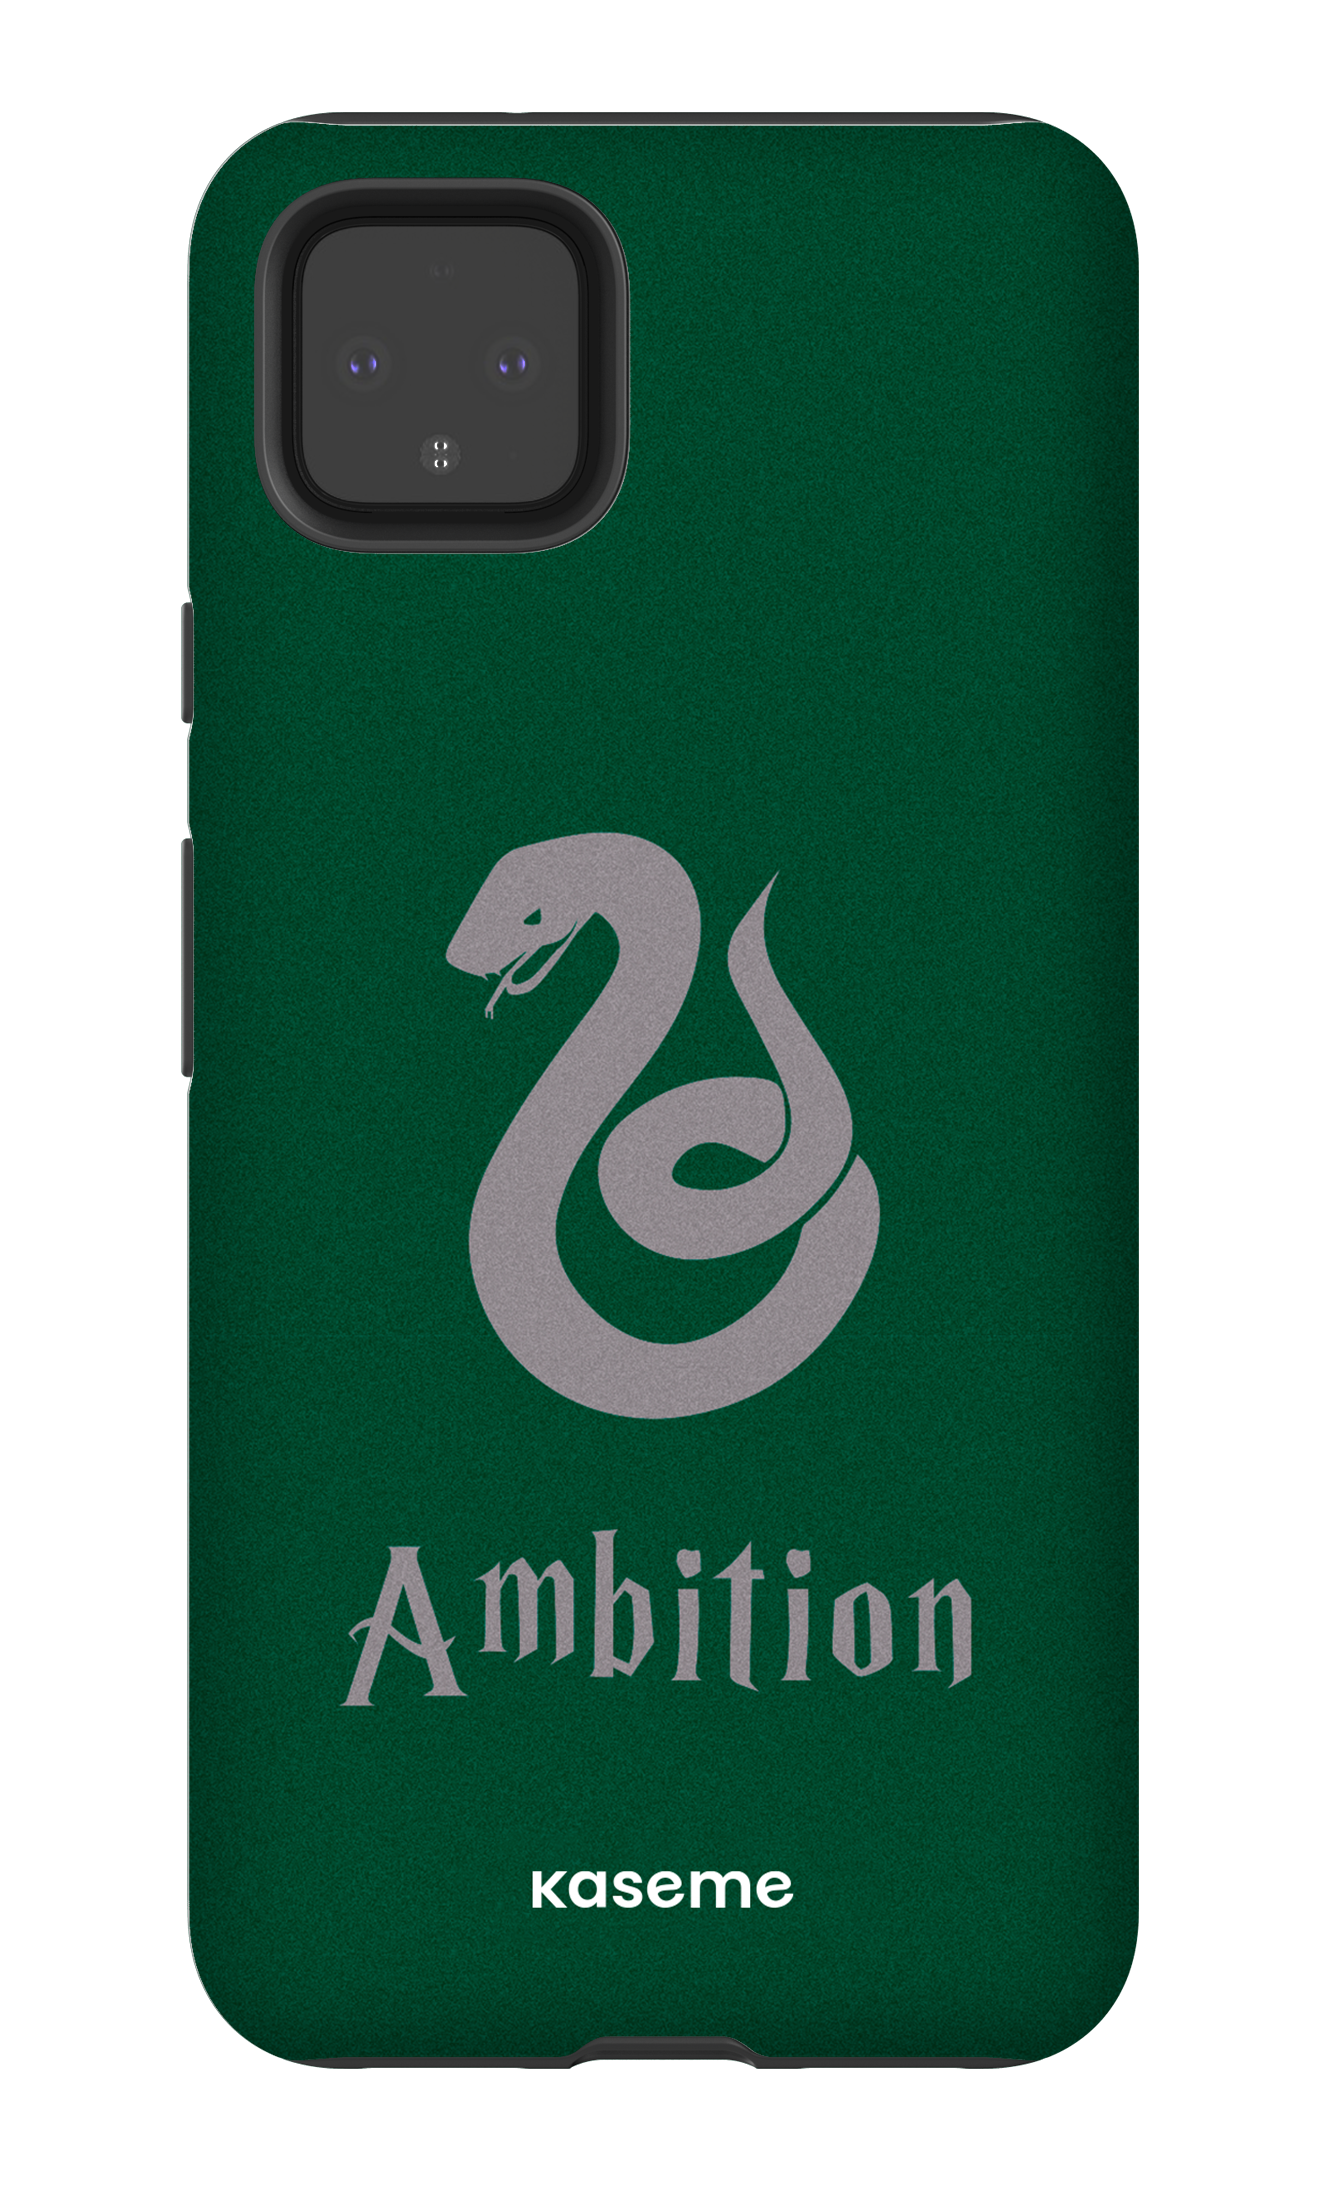 Ambition - Google Pixel 4 XL